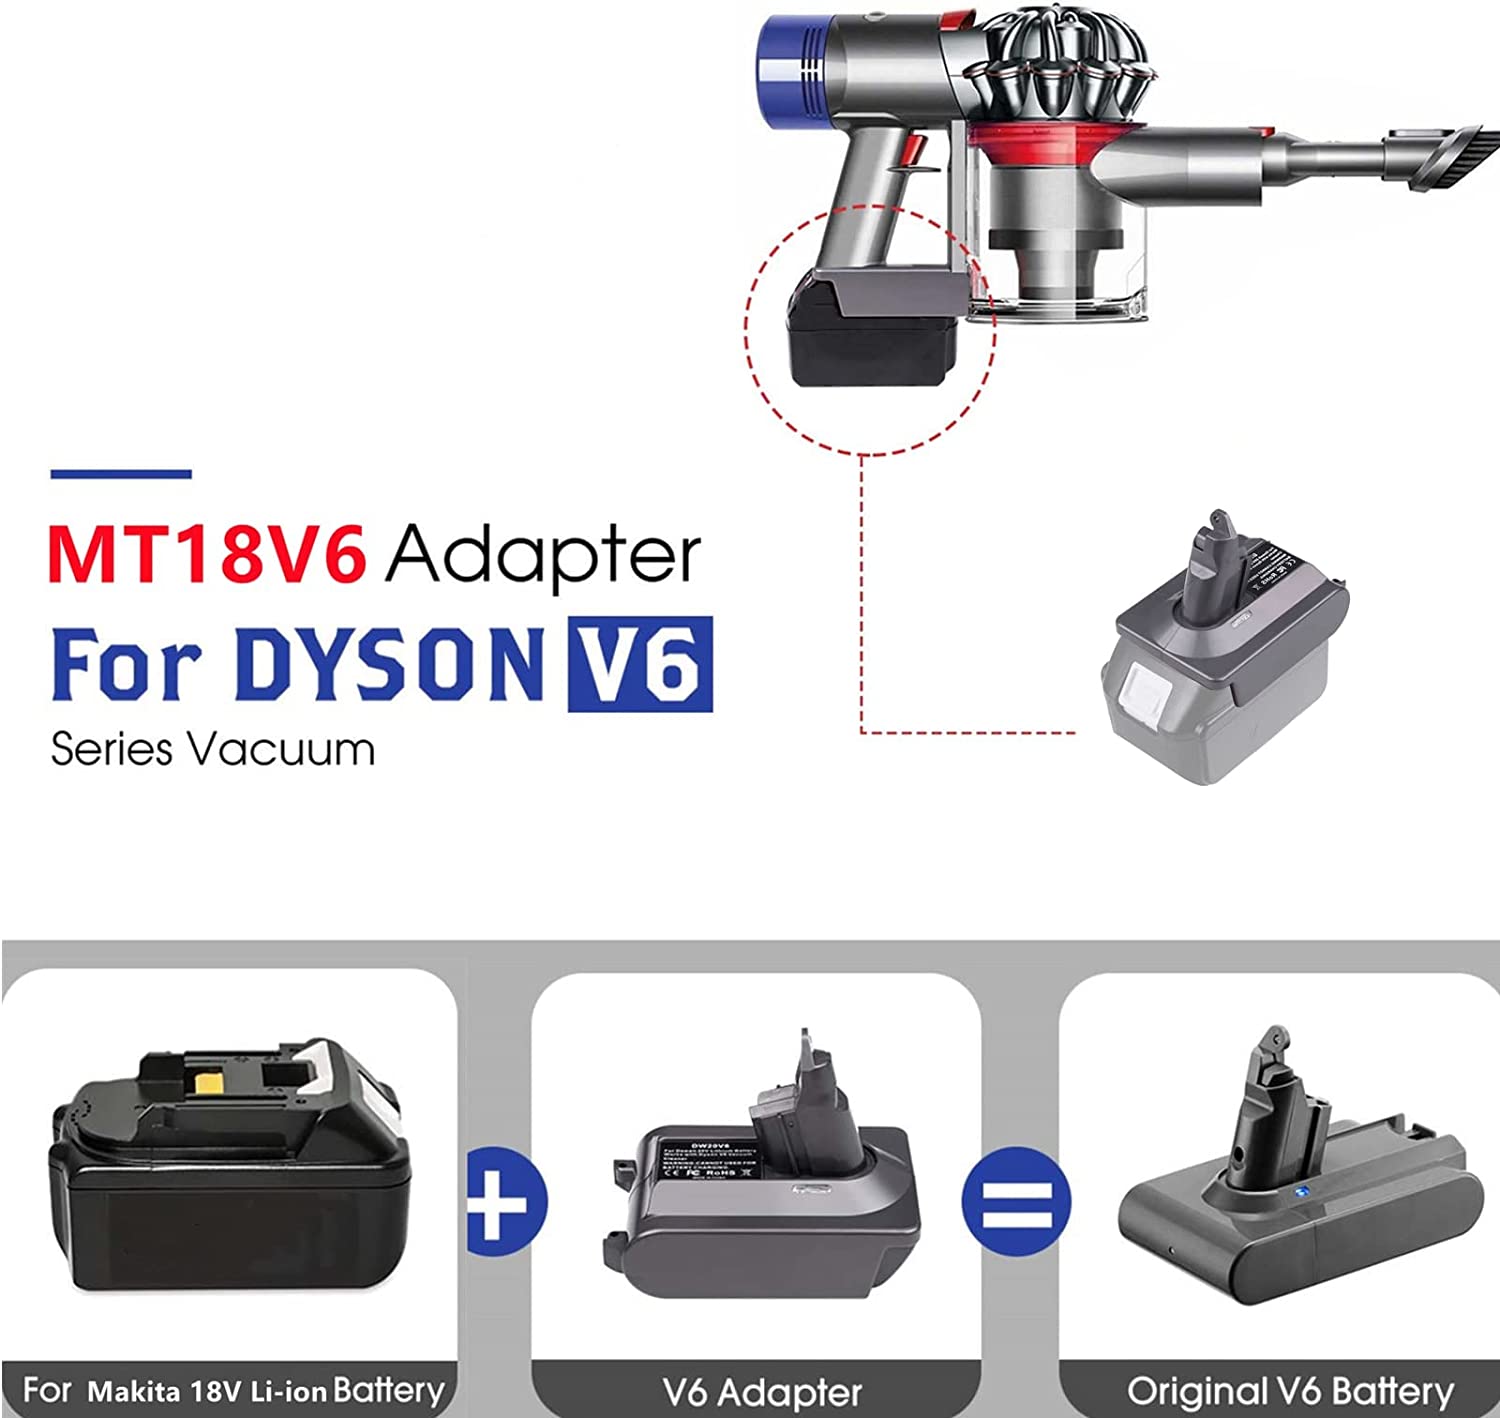 Adaptador de bateria Dyson V6 per a bateria de liti Makita 18V convertida a bateria Dyson V6